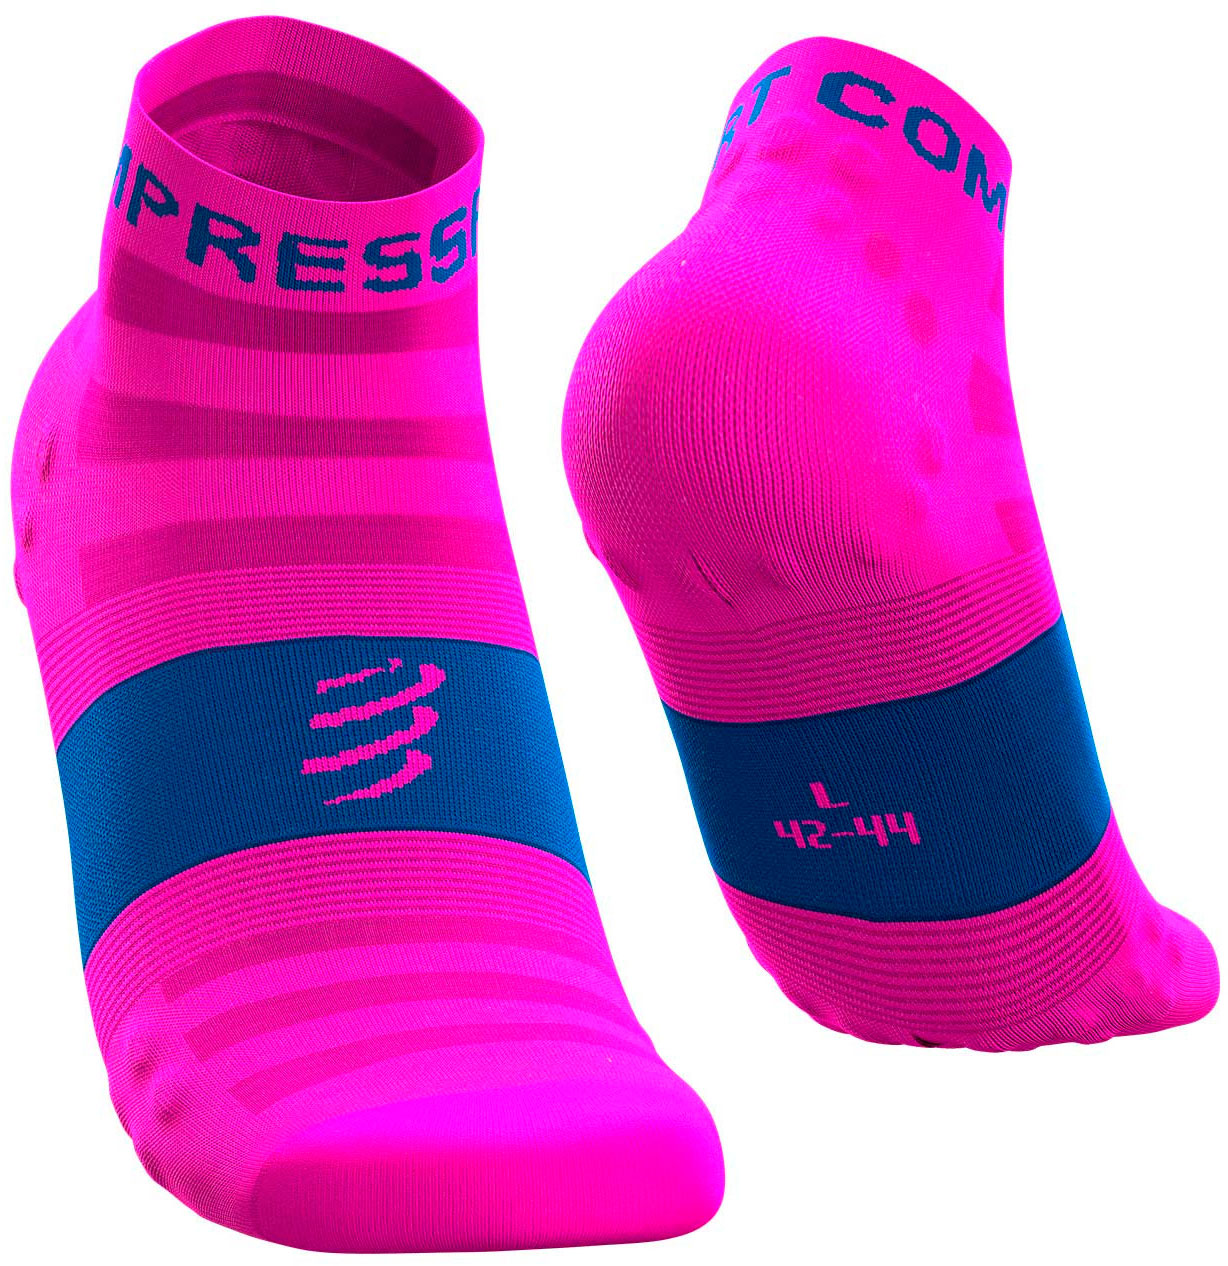 Шкарпетки компресійні Compressport Pro Racing Socks V3.0 Run Low, Dusty Olive